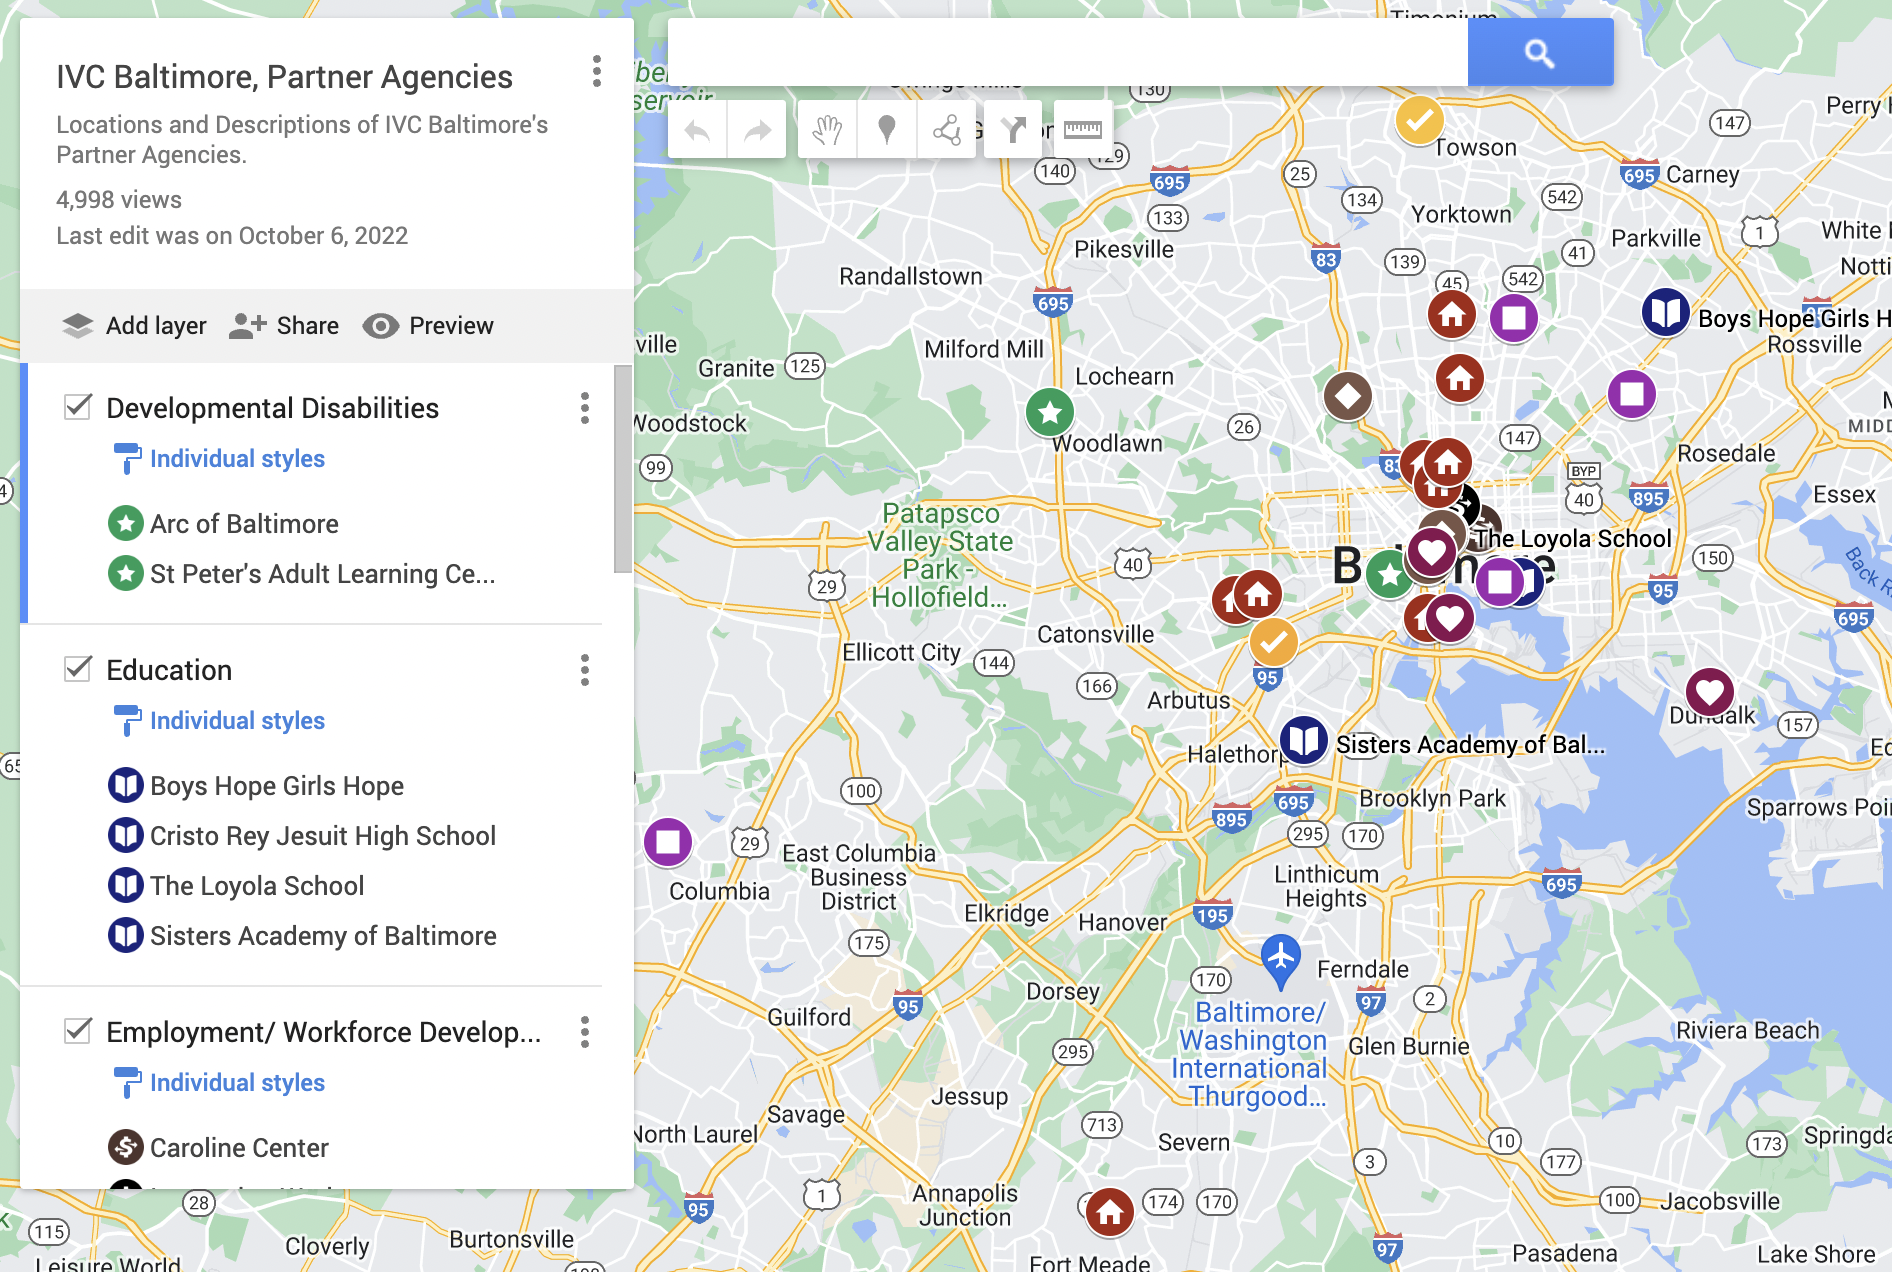 Map of IVC Baltimore Partner Agencies